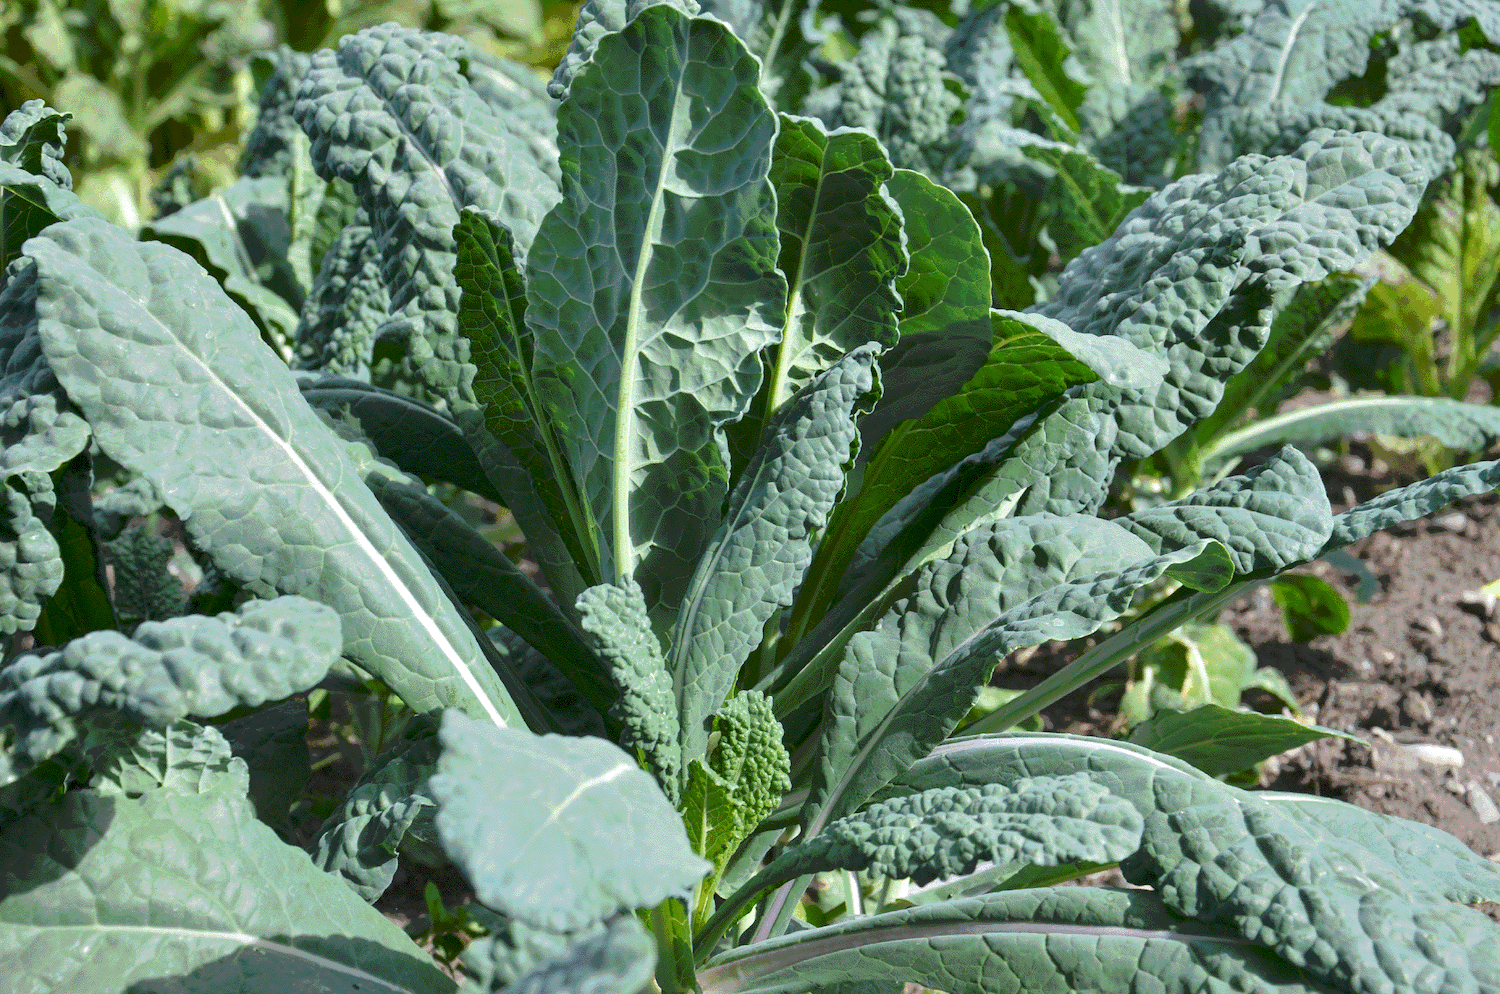 lacinato kale leaves growing in raise bed vegetable garden